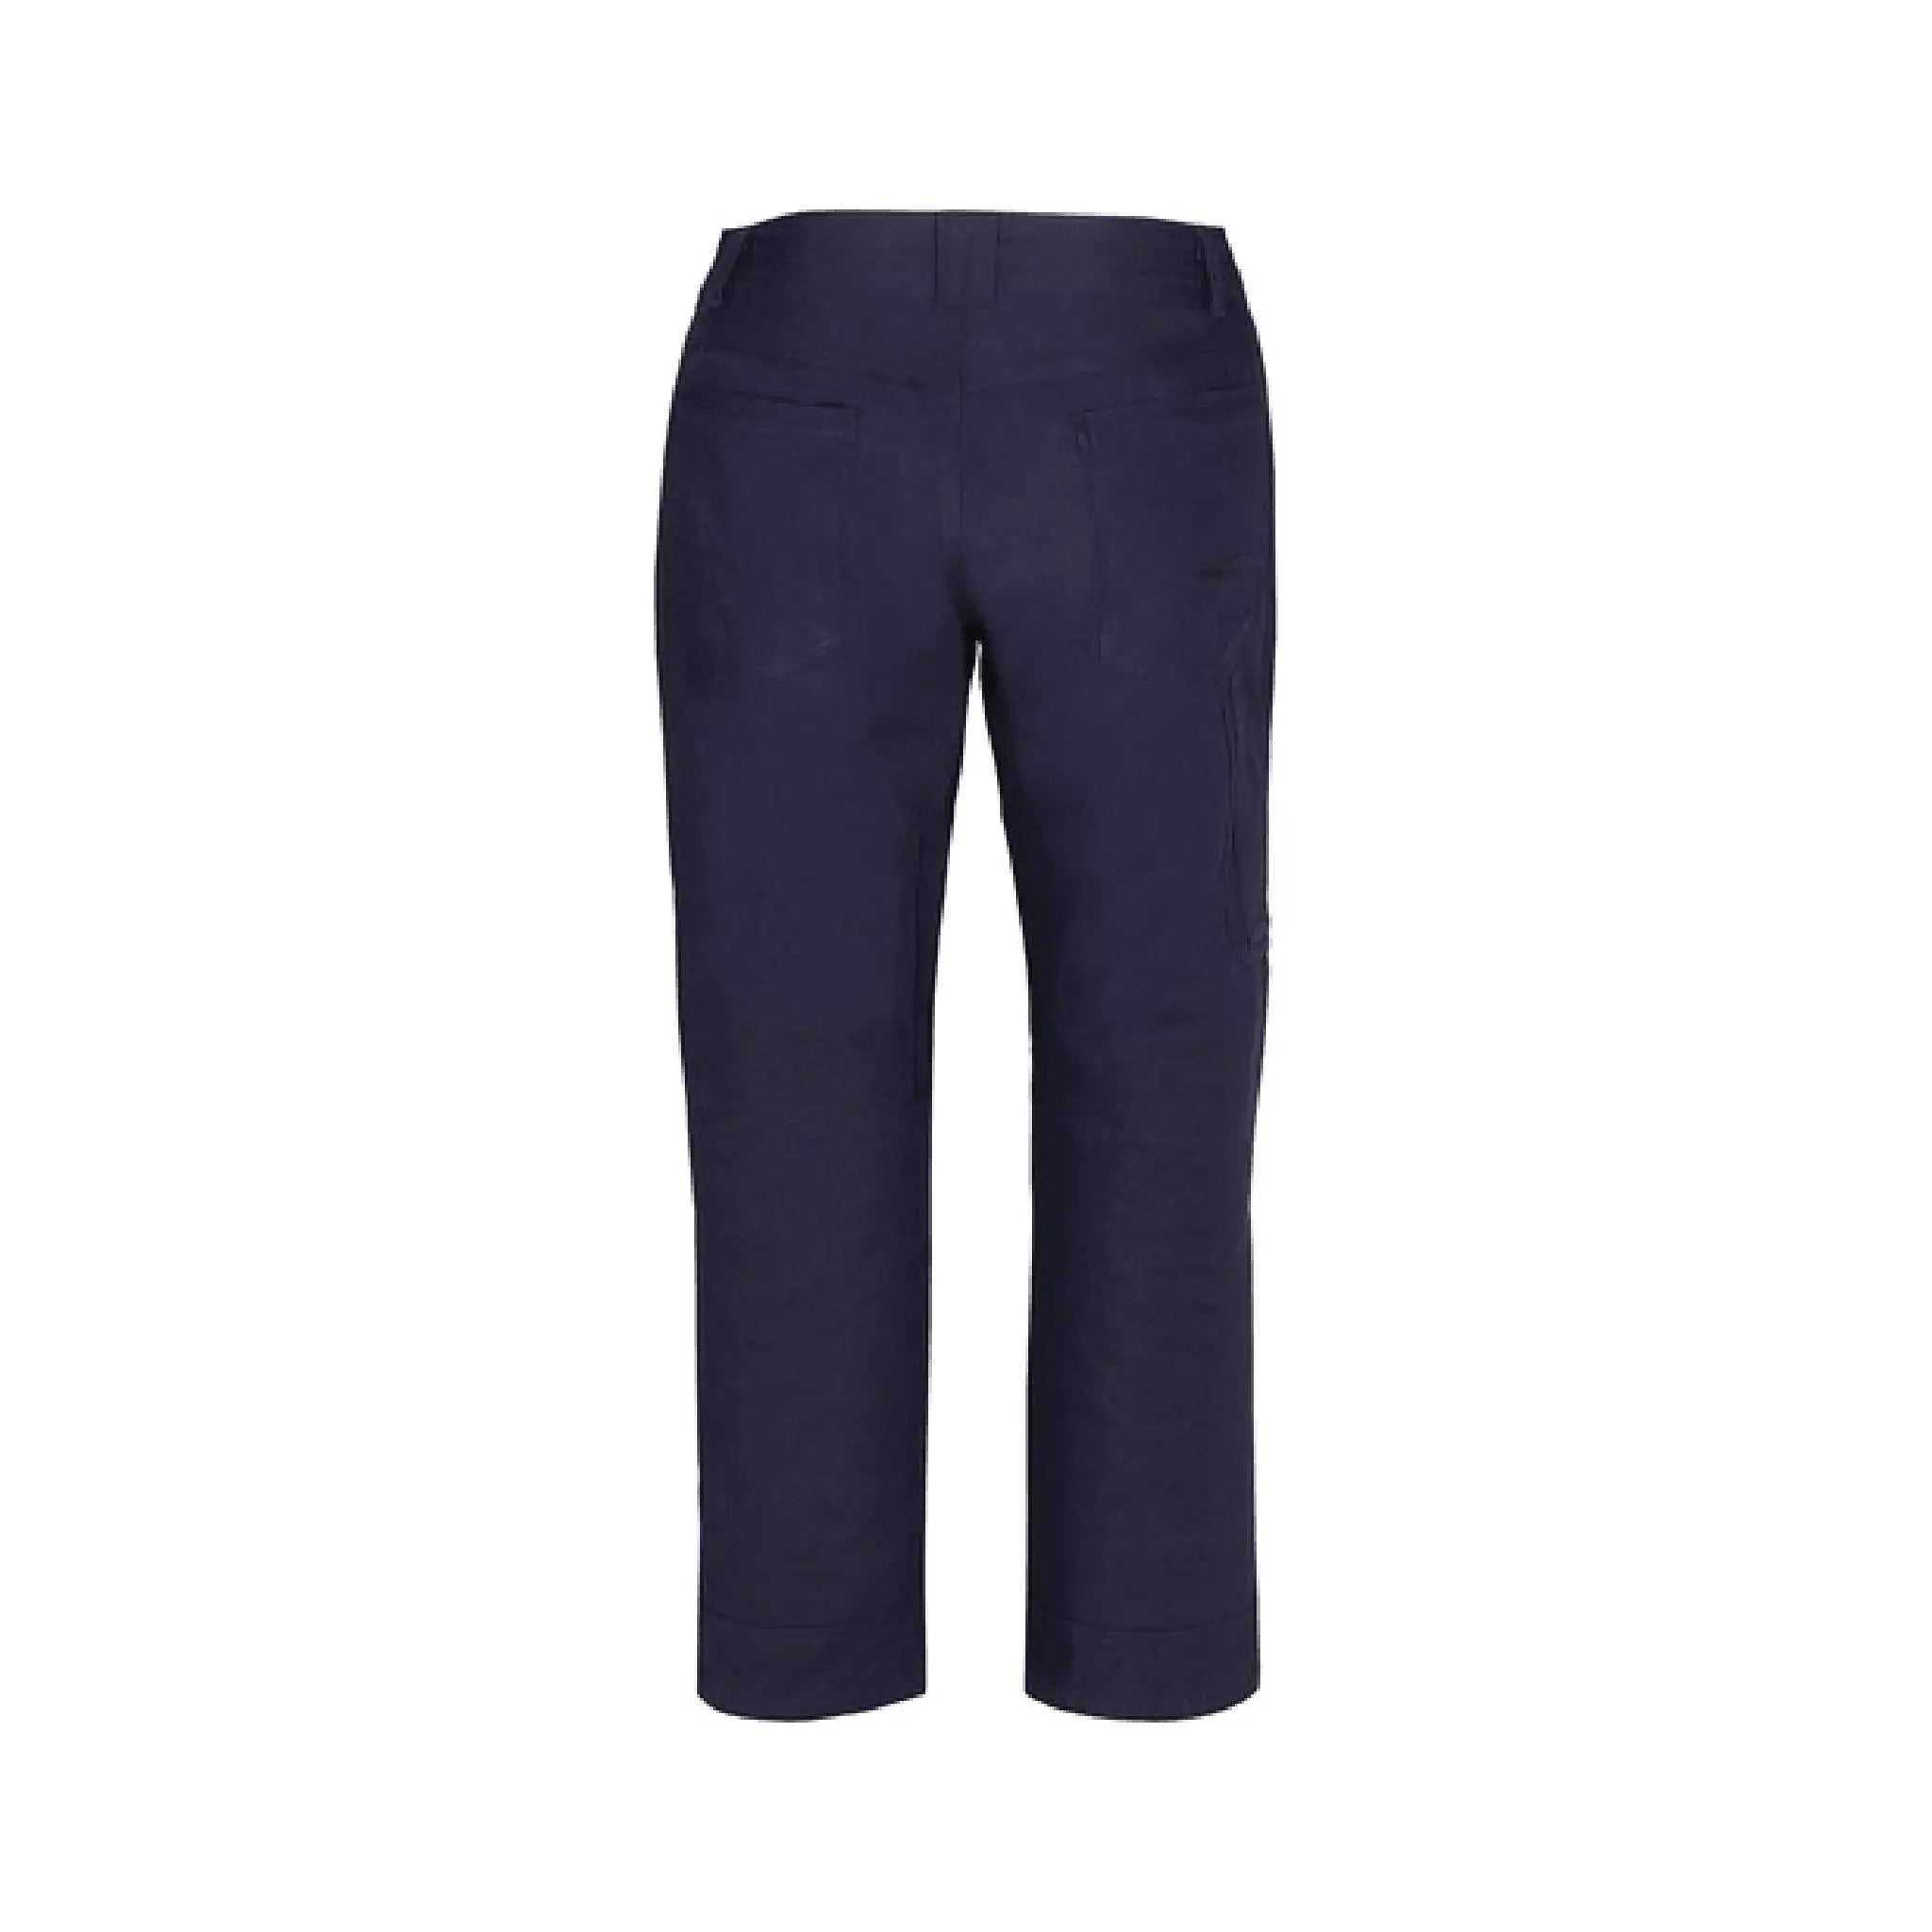 LAKELAND FR - Men's/Women's FR Light Weight Pants, Navy Blue